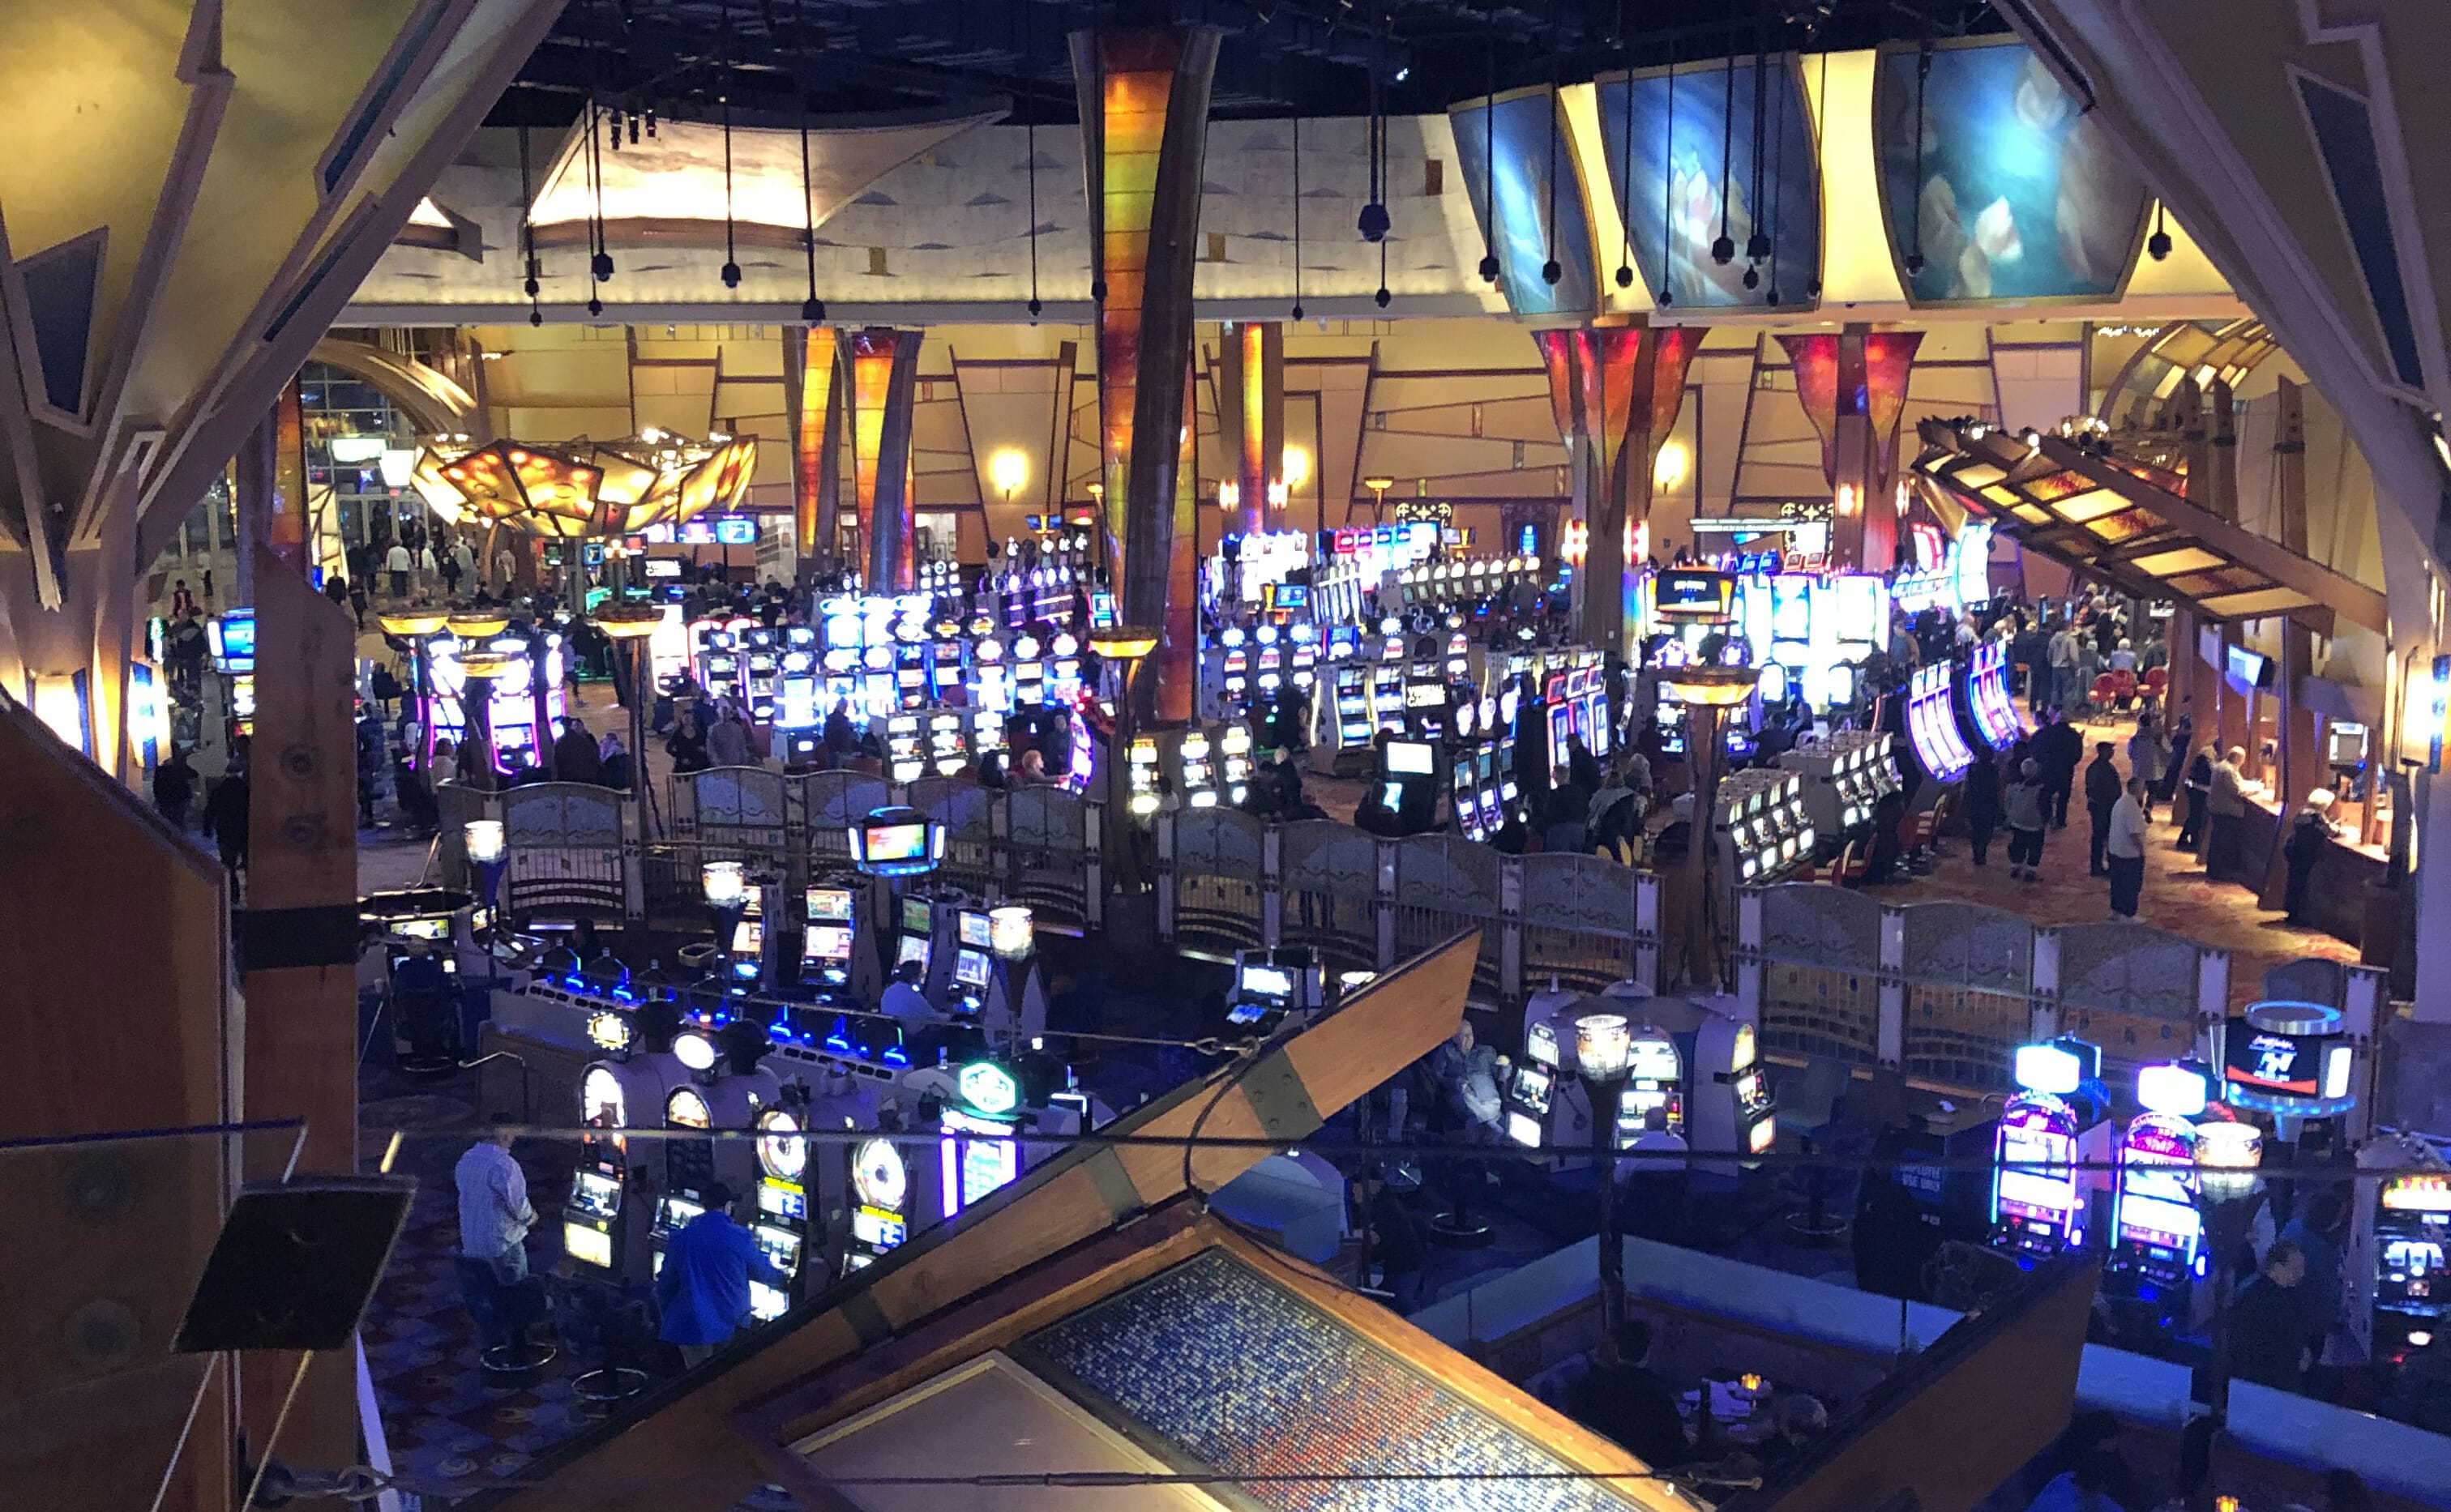 Mohegan Sun Online Casino free instals